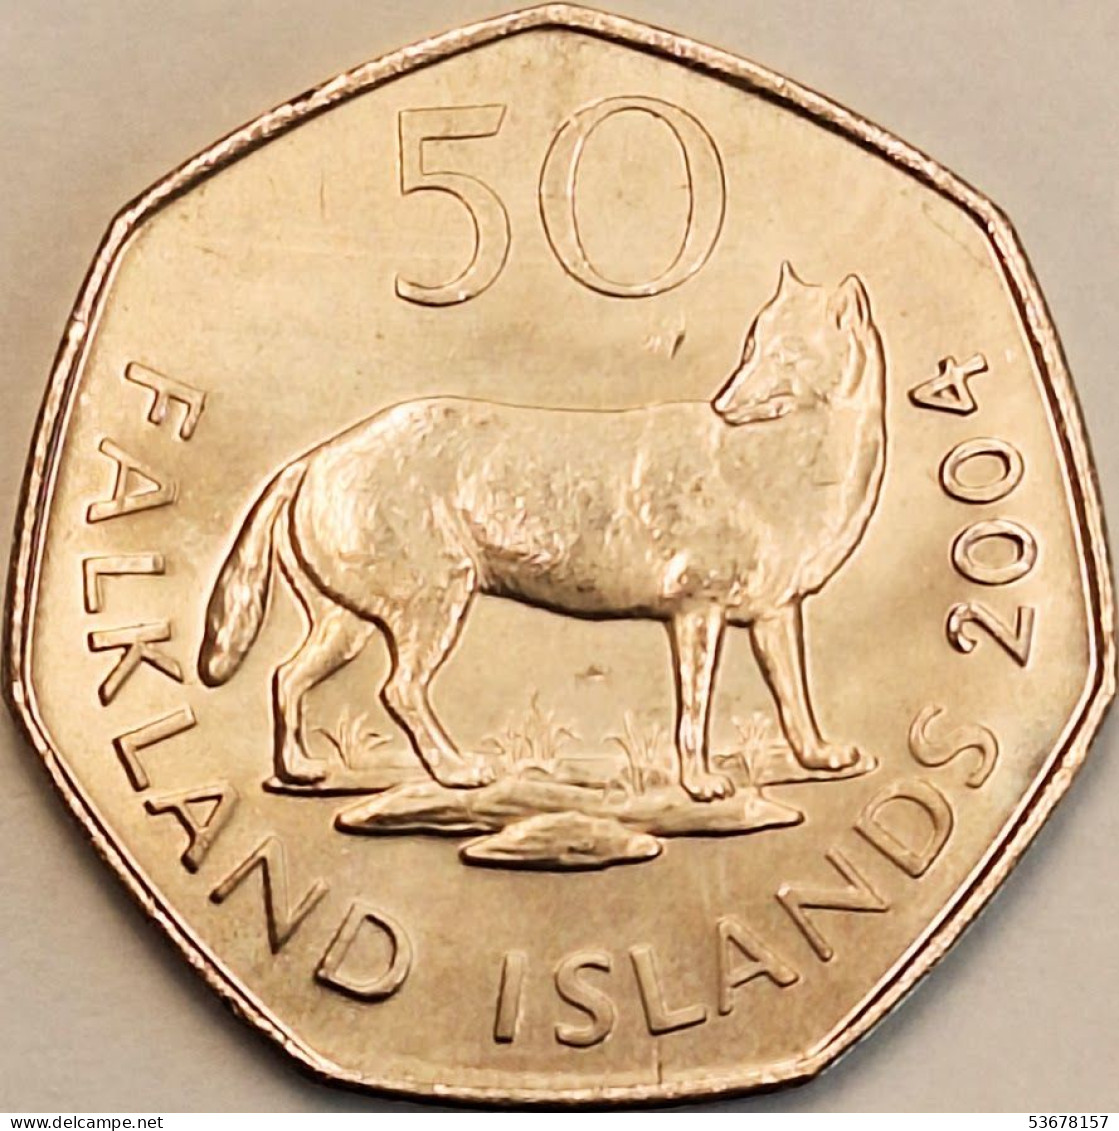 Falkland Islands - 50 Pence 2004, KM# 135 (#3862) - Falkland Islands